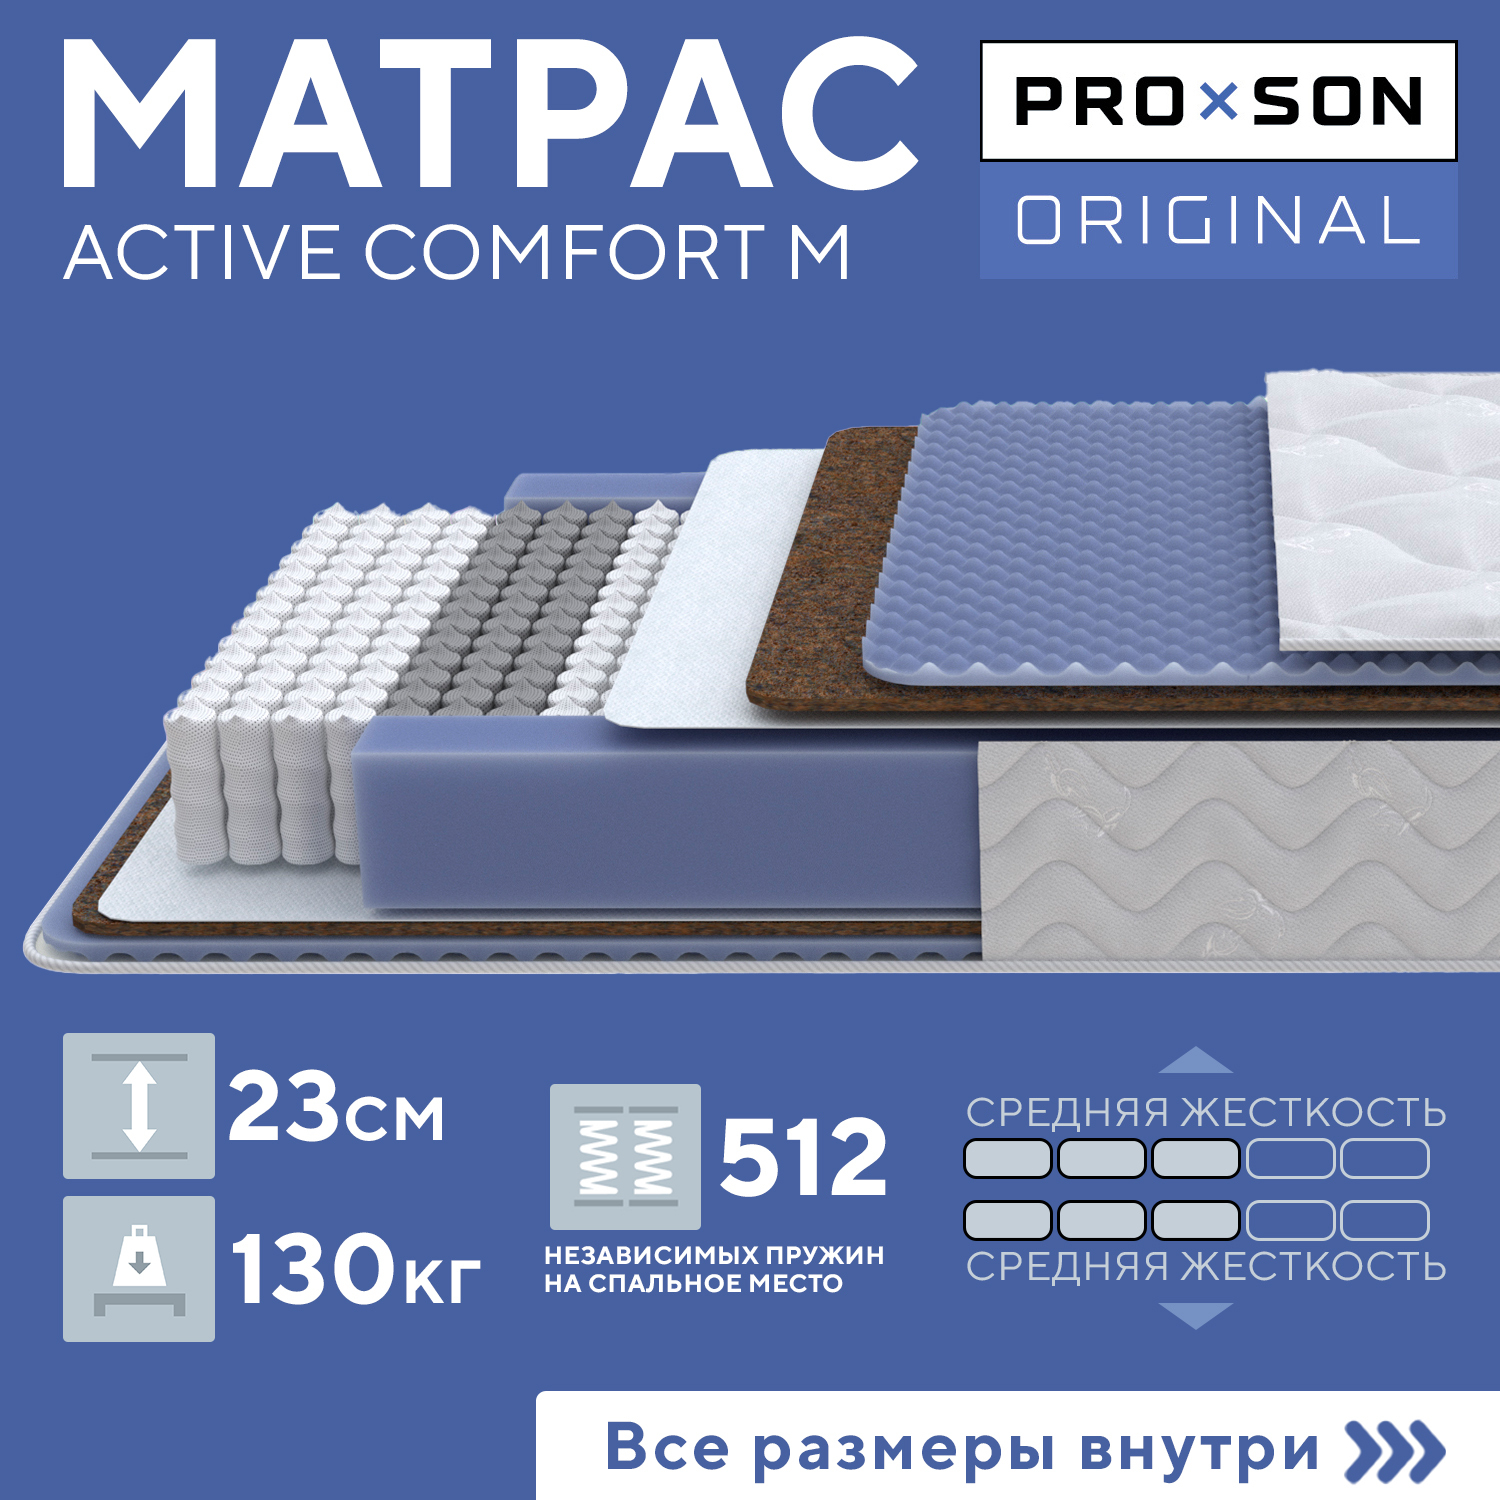 Матрас Proson Original Active Comfort m